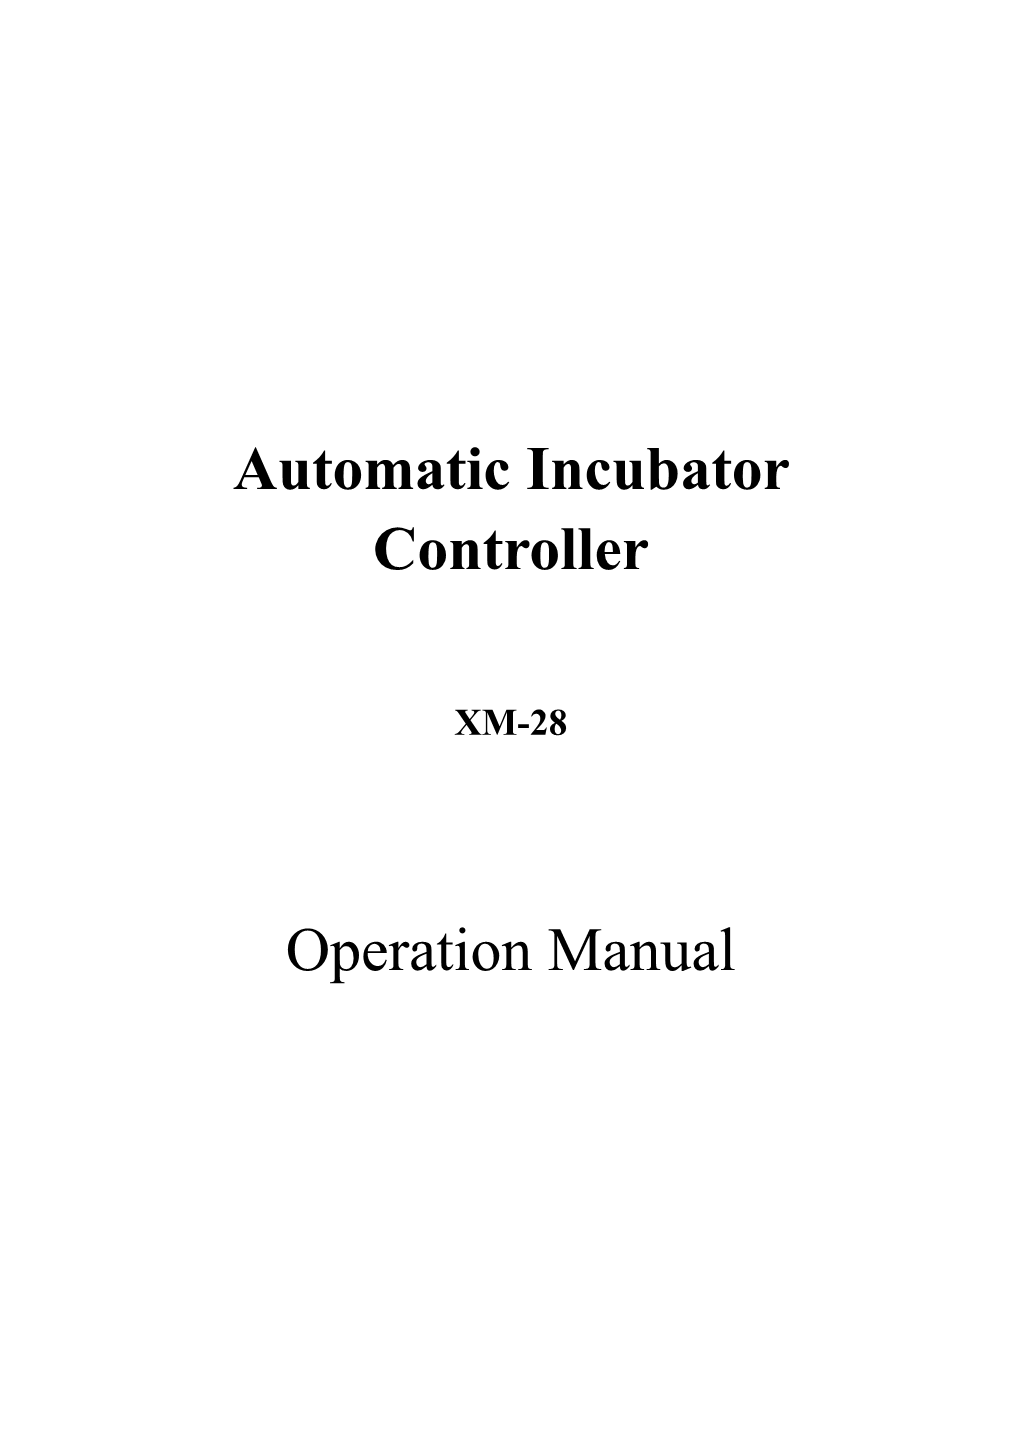 Automatic Incubator Controller